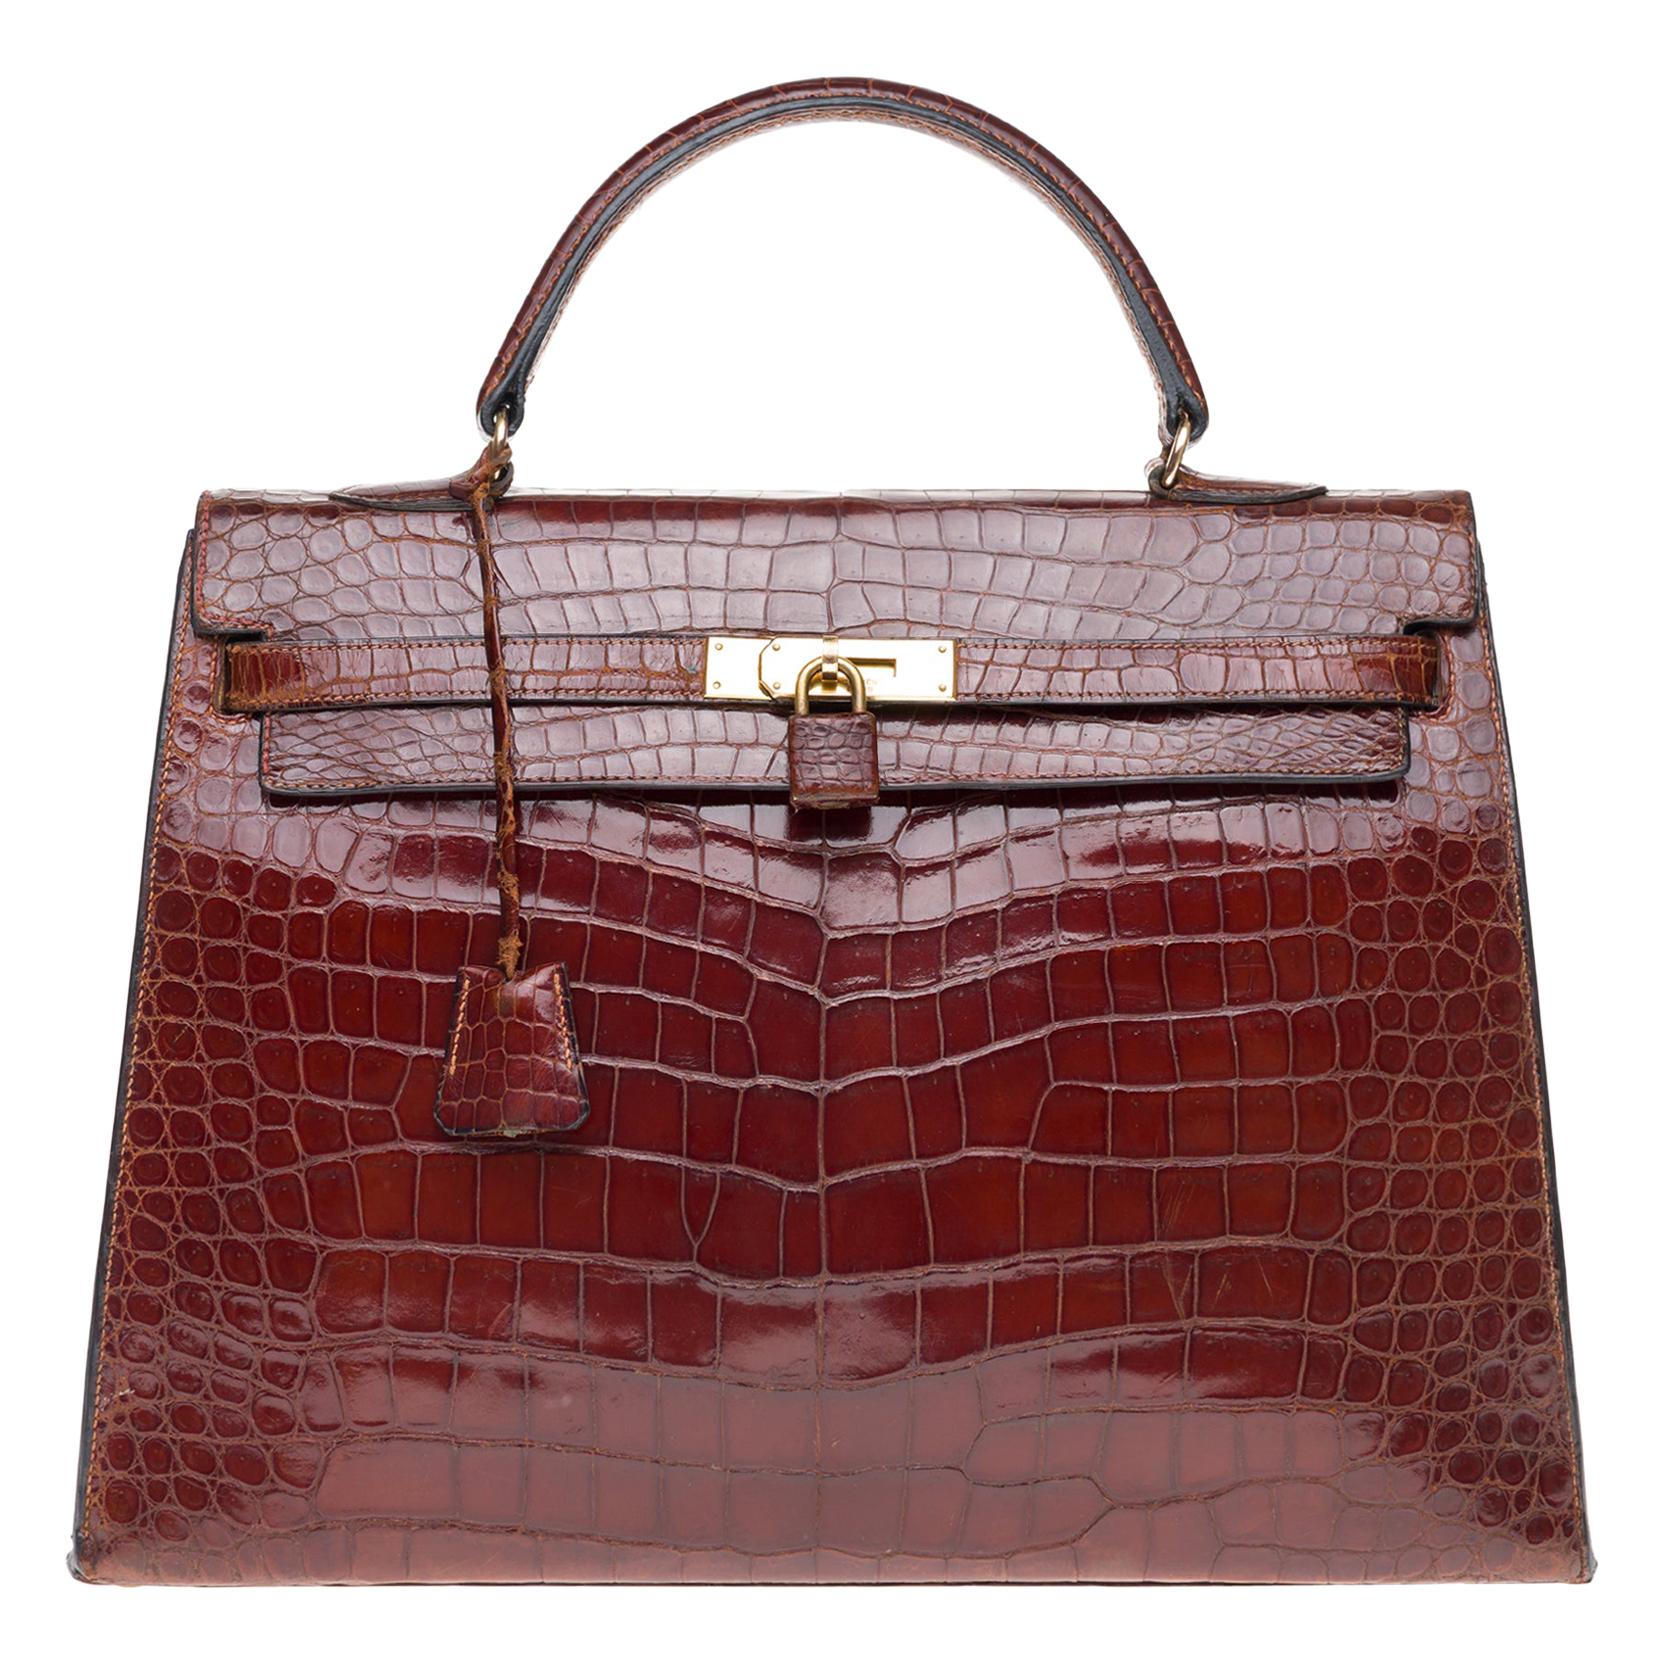 Stunning Hermes Kelly 35 handbag in Brown Crocodile Leather, golden hardware